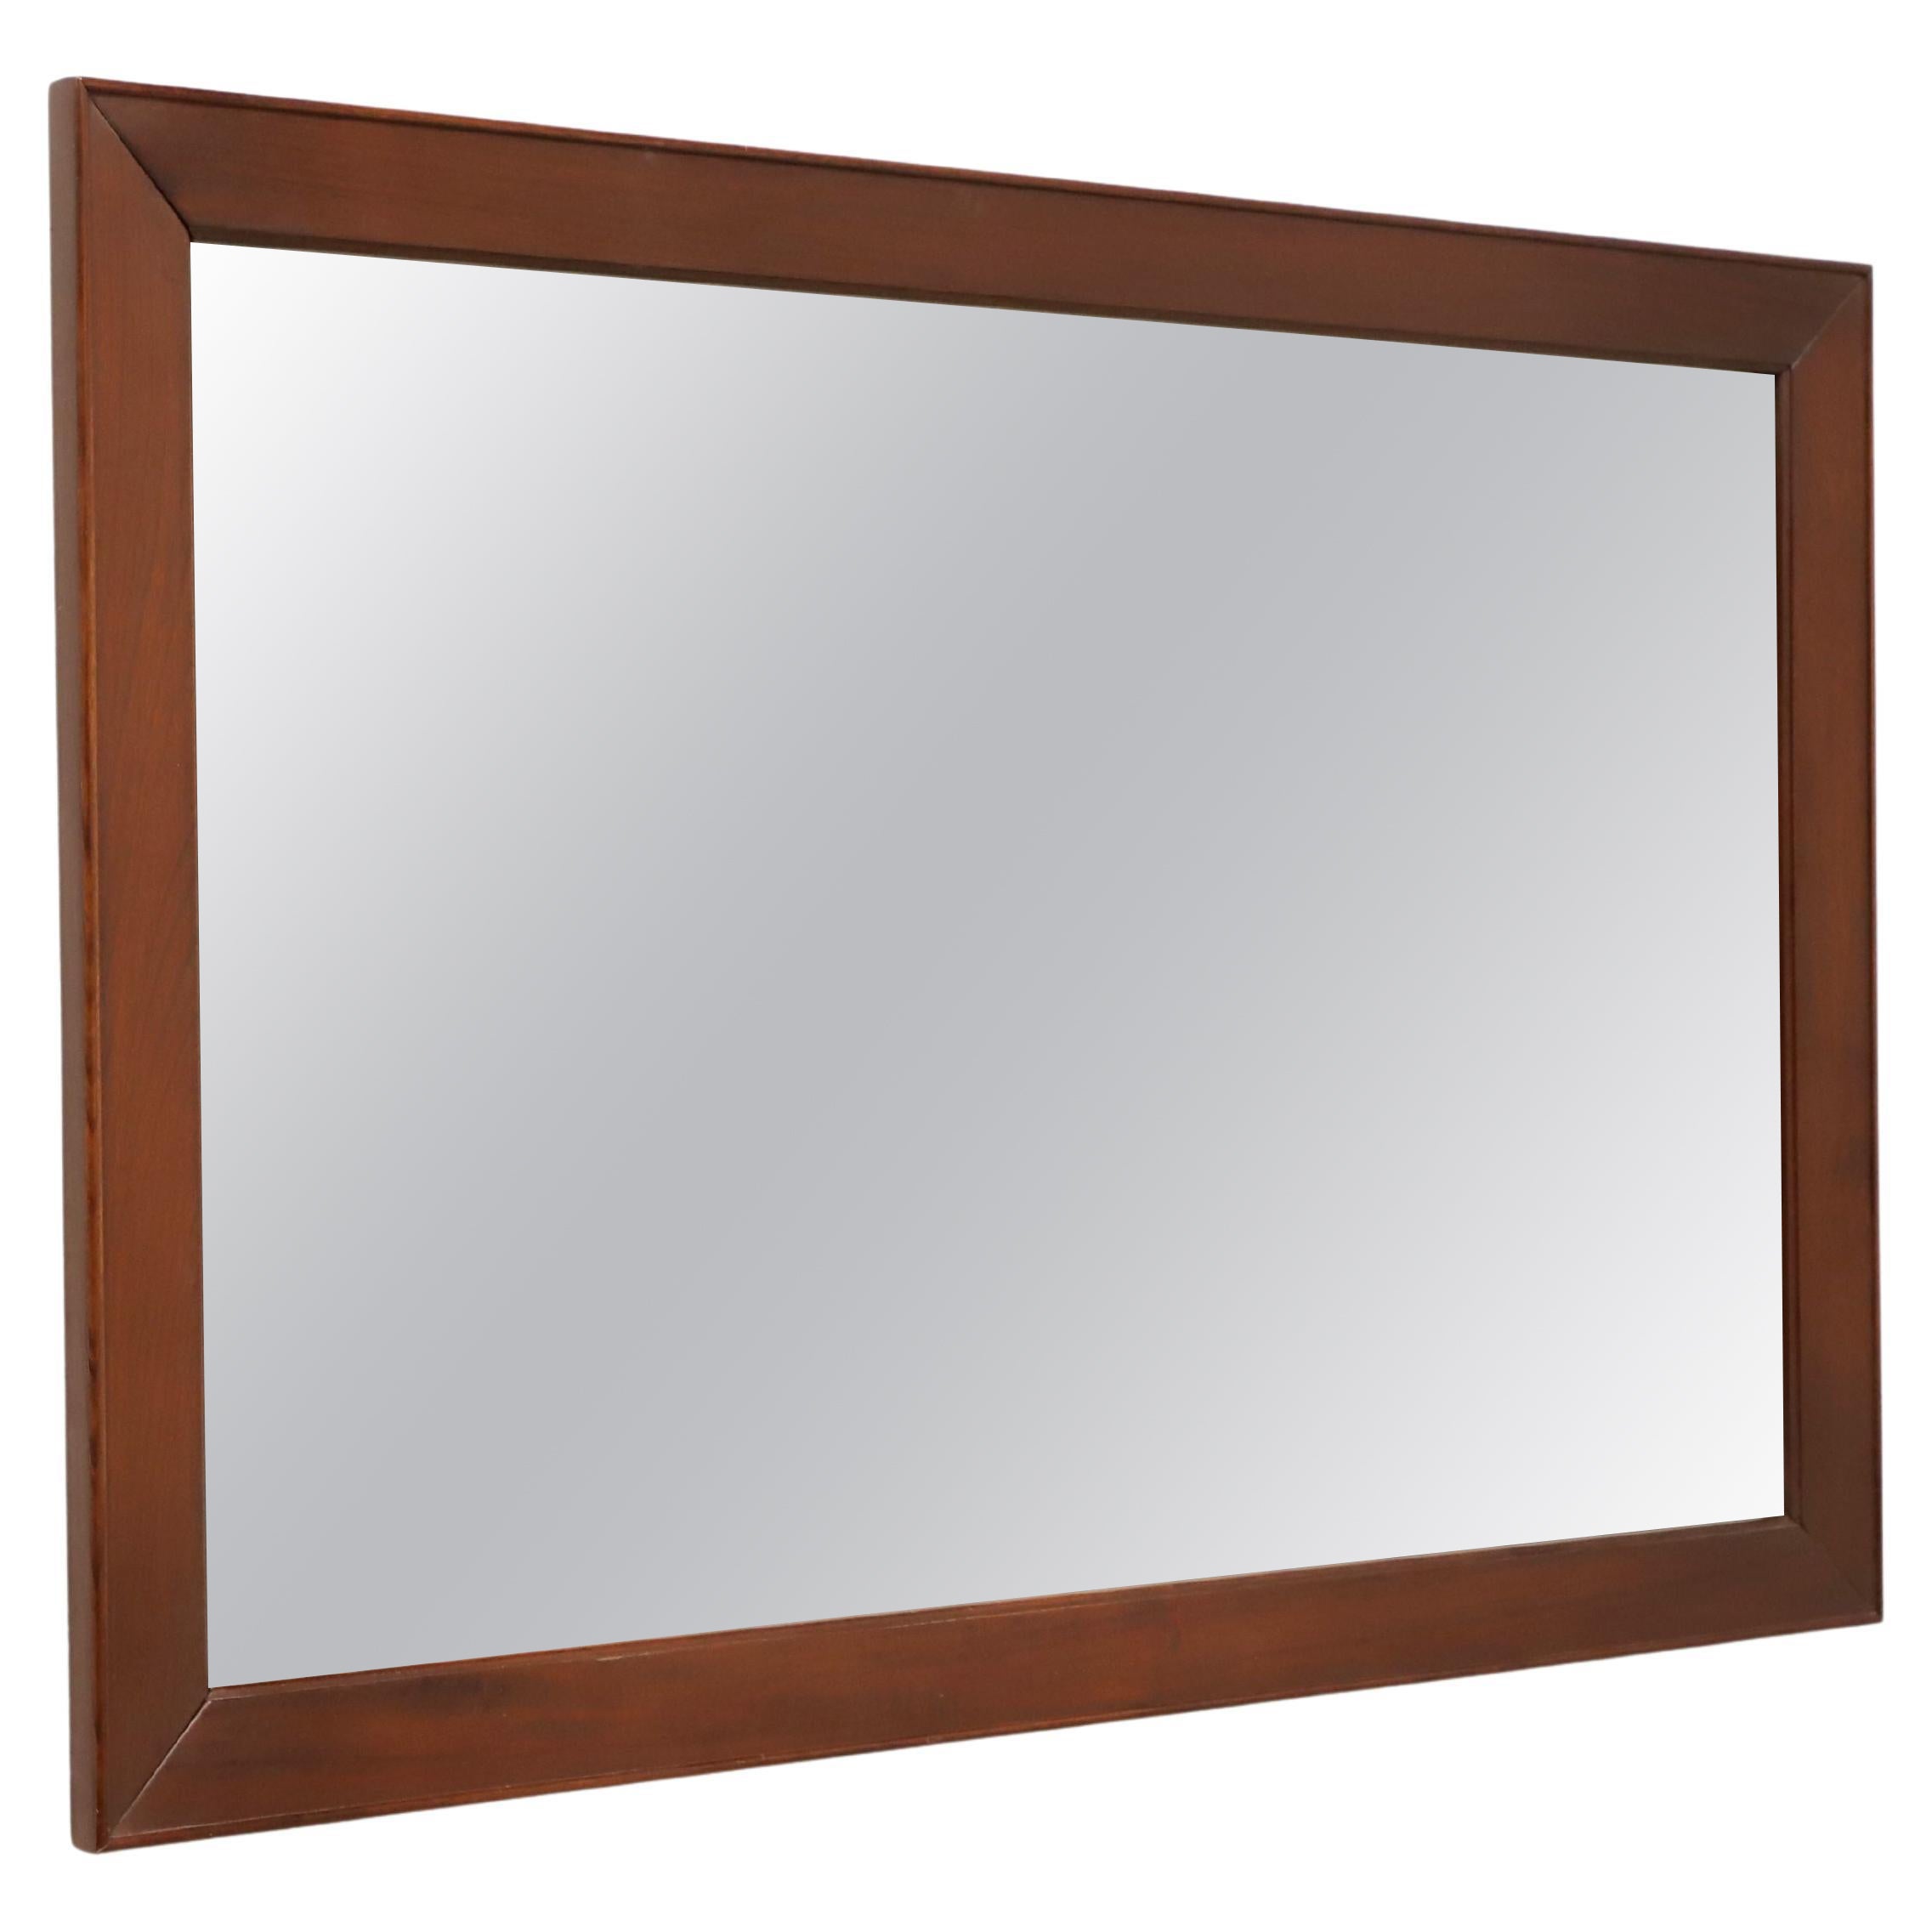 CRAFTIQUE Mellowax Solid Mahogany Rectangular Dresser / Wall Mirror